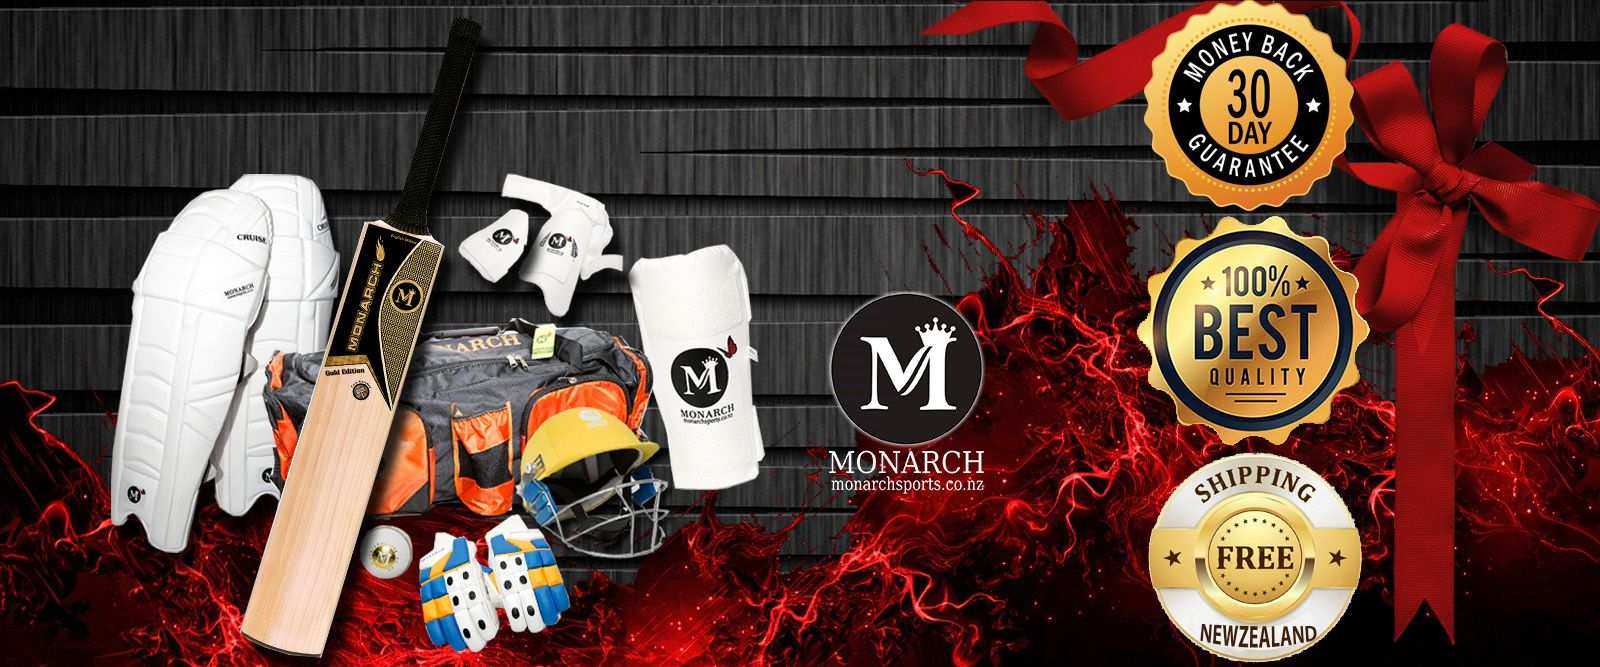 www.monarchsports.co.nz 